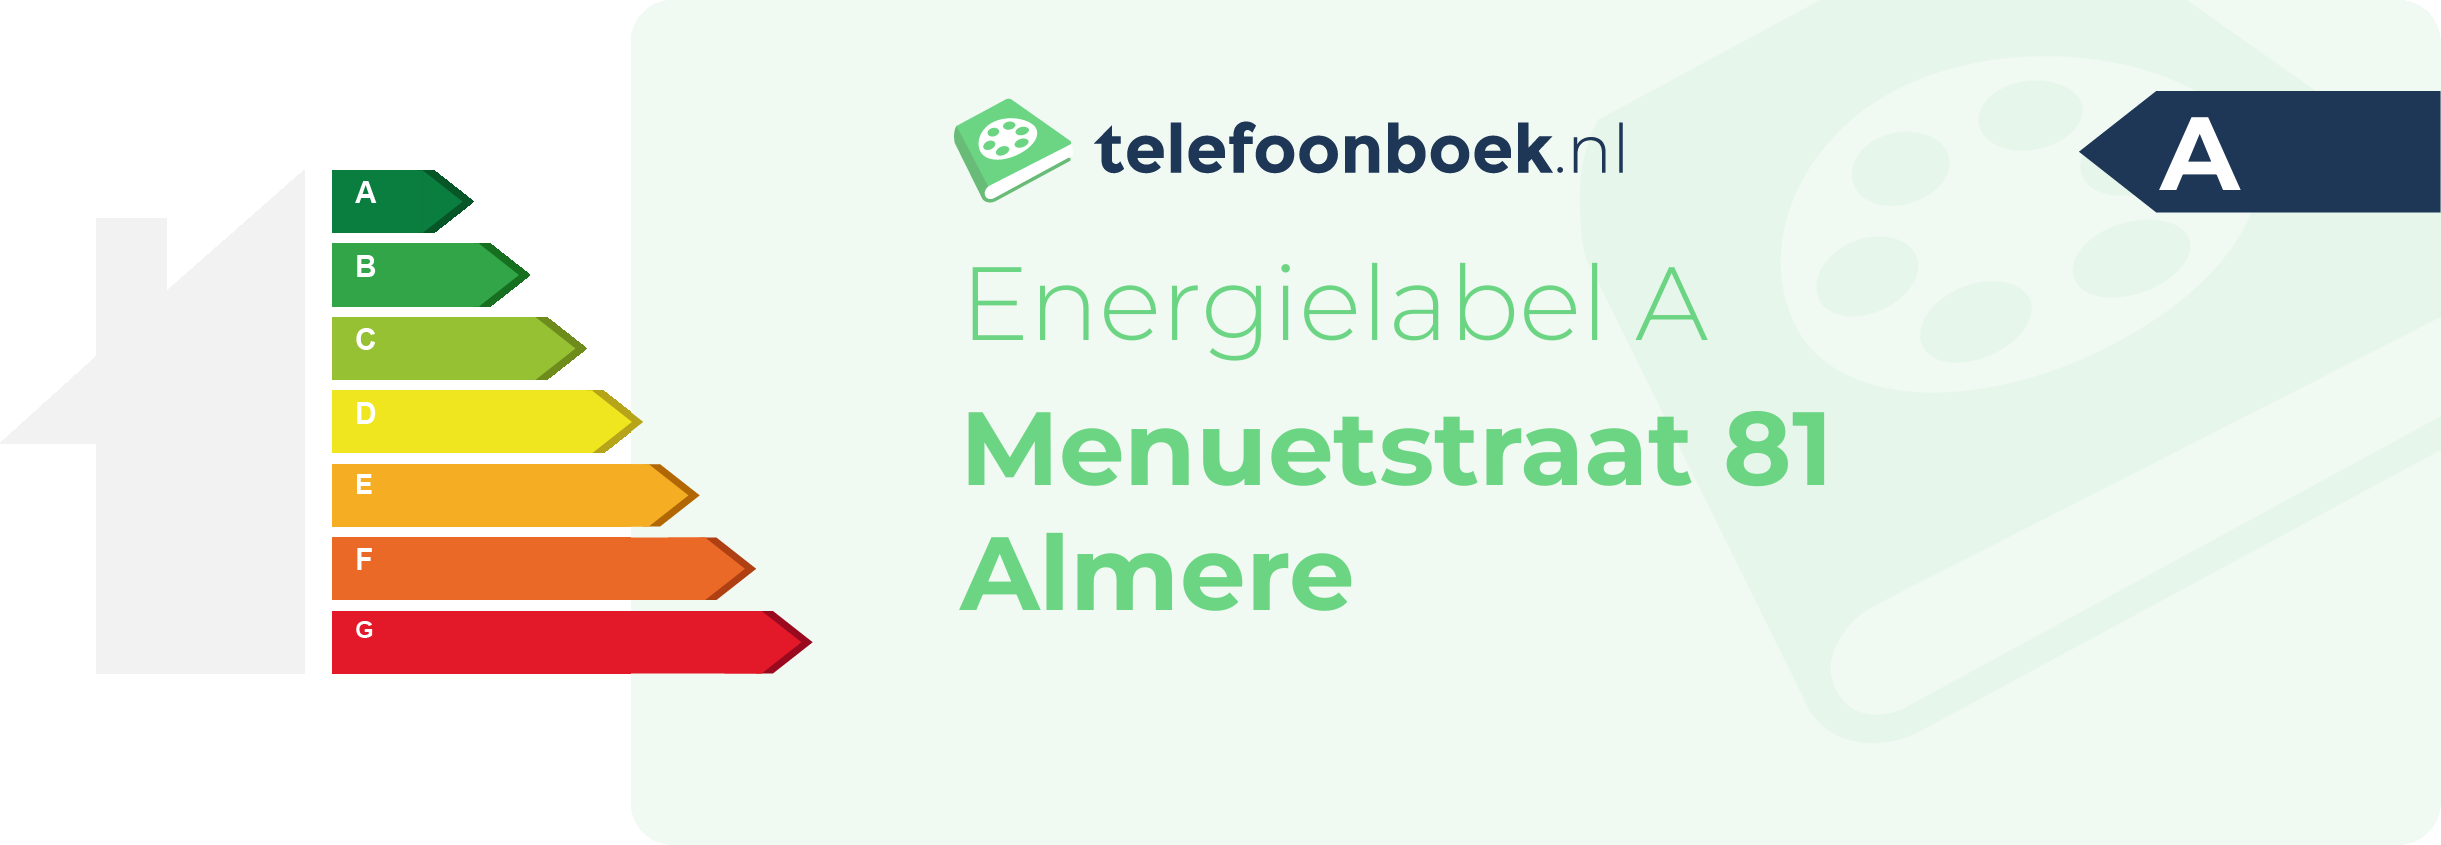 Energielabel Menuetstraat 81 Almere